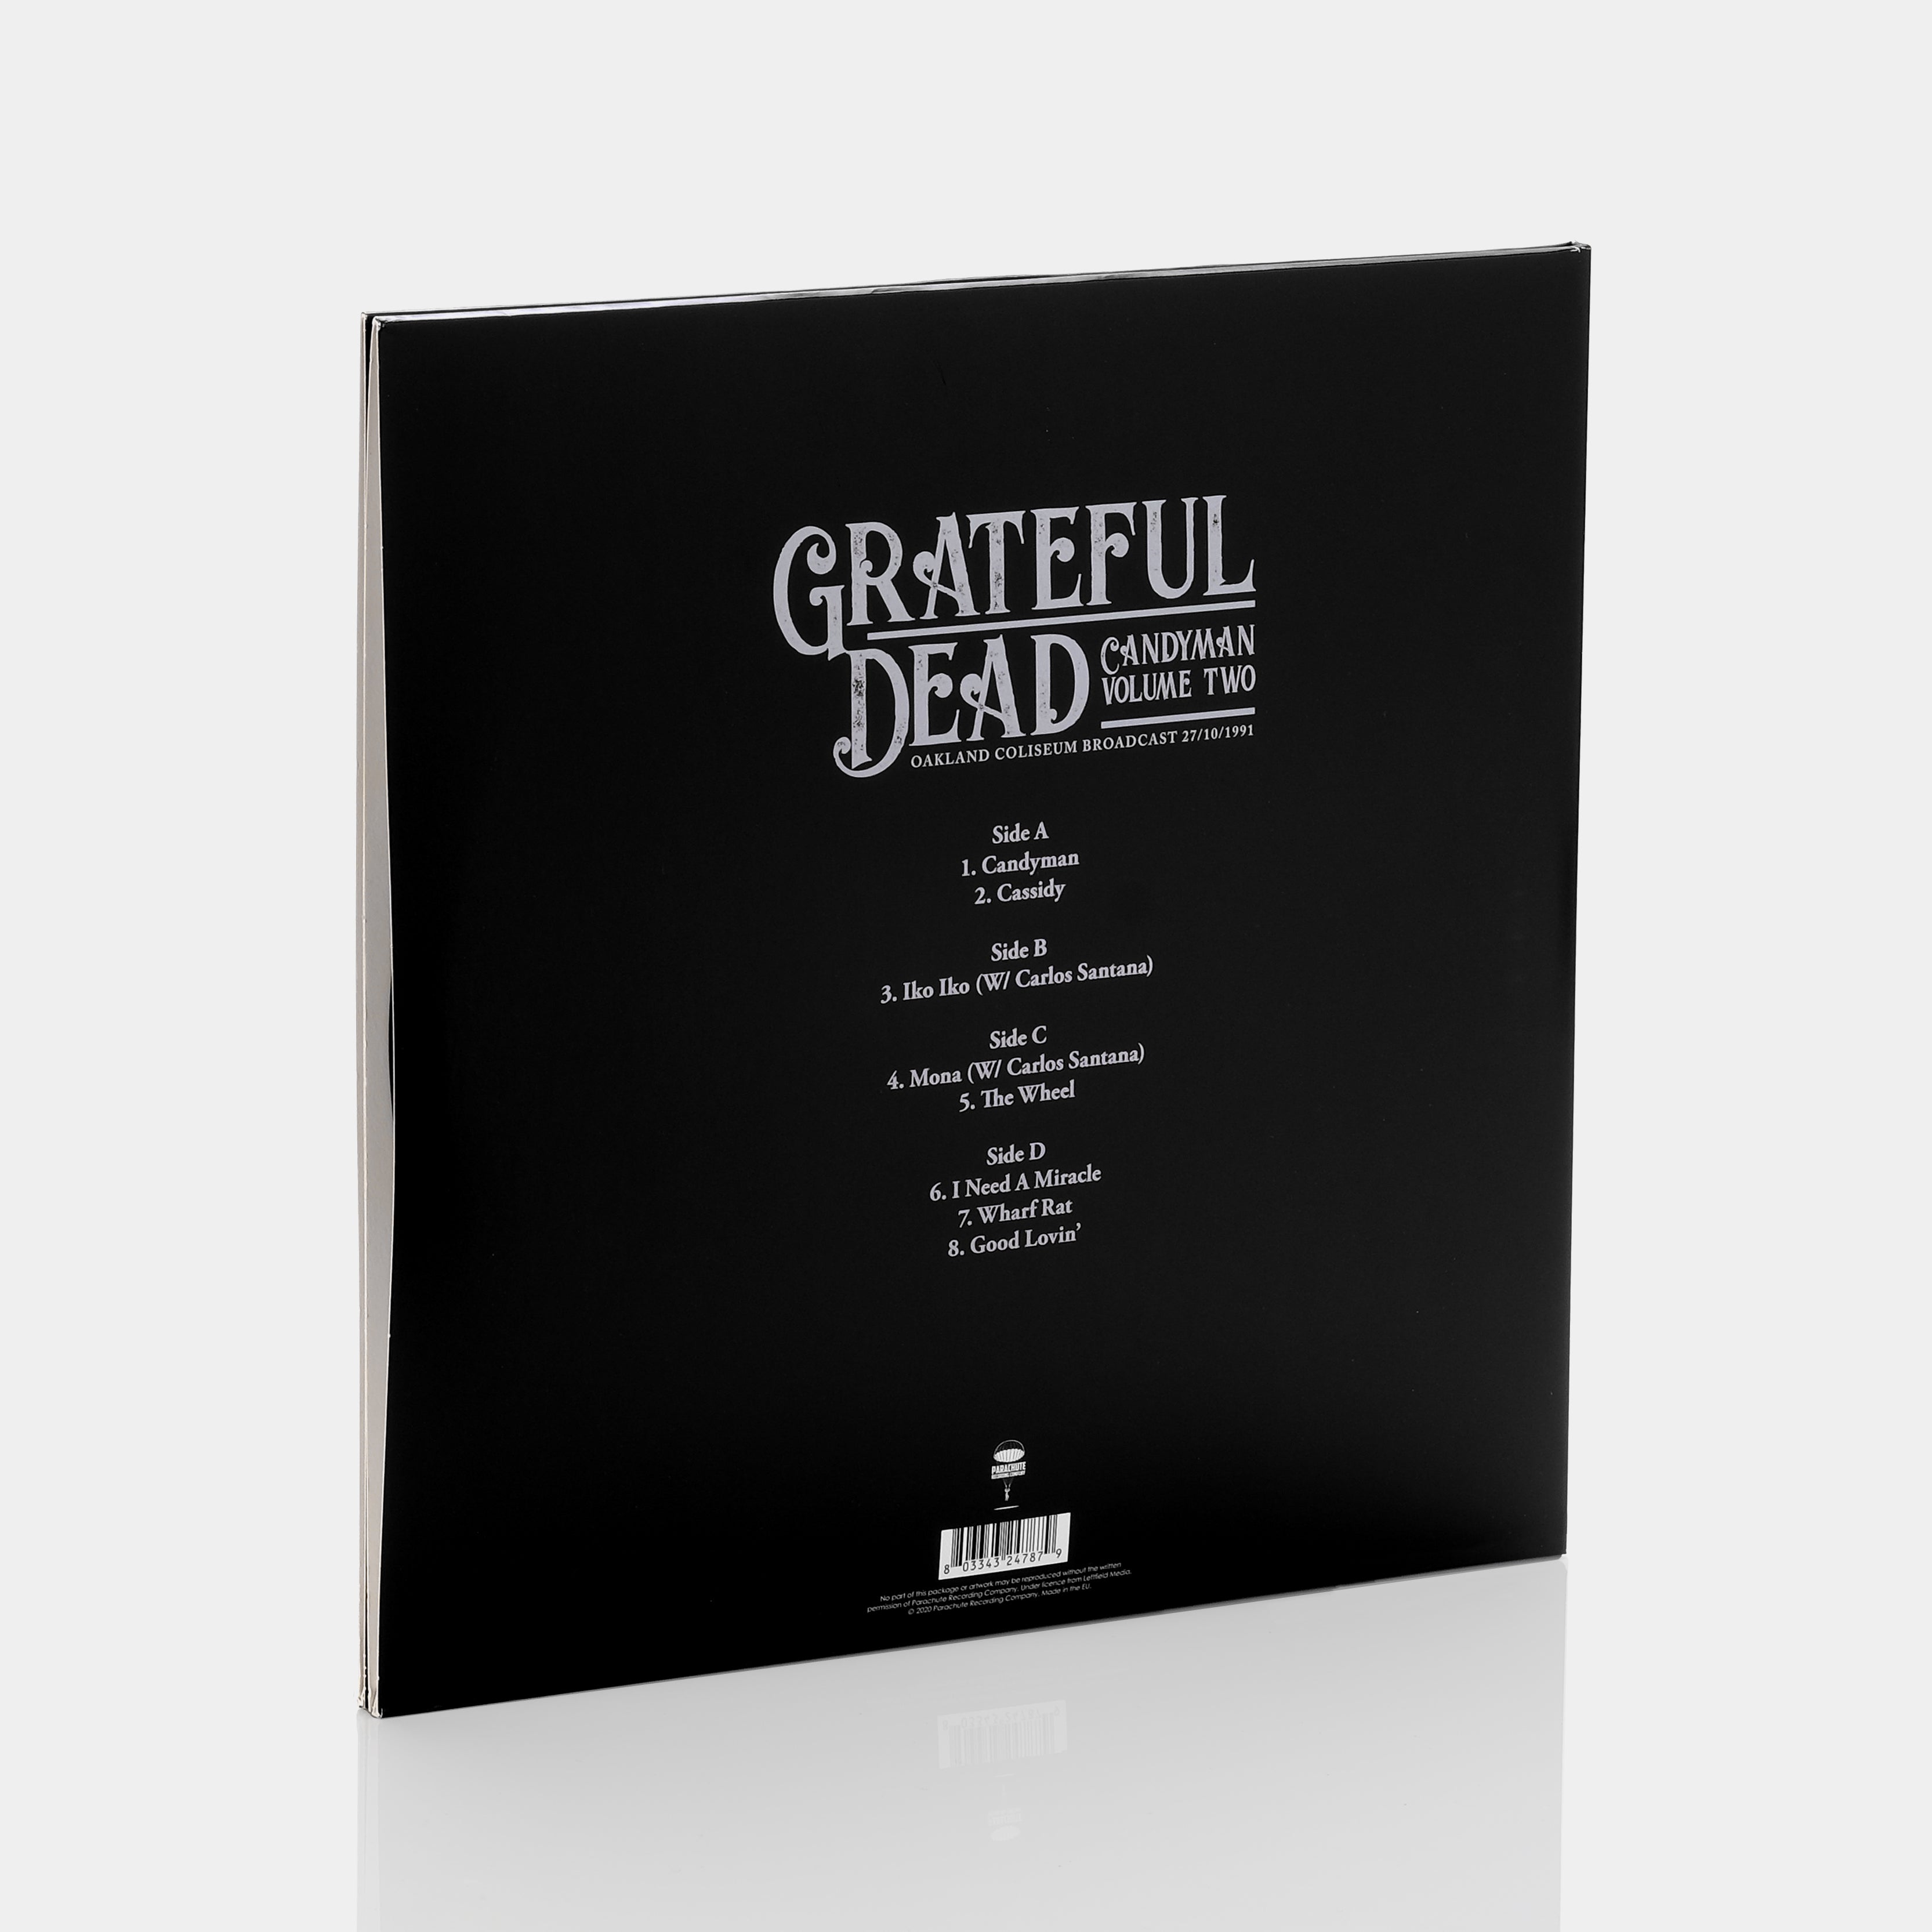 Grateful Dead - Candyman: Oakland Coliseum Broadcast 27/10/1991 (Volume Two) 2xLP Vinyl Record